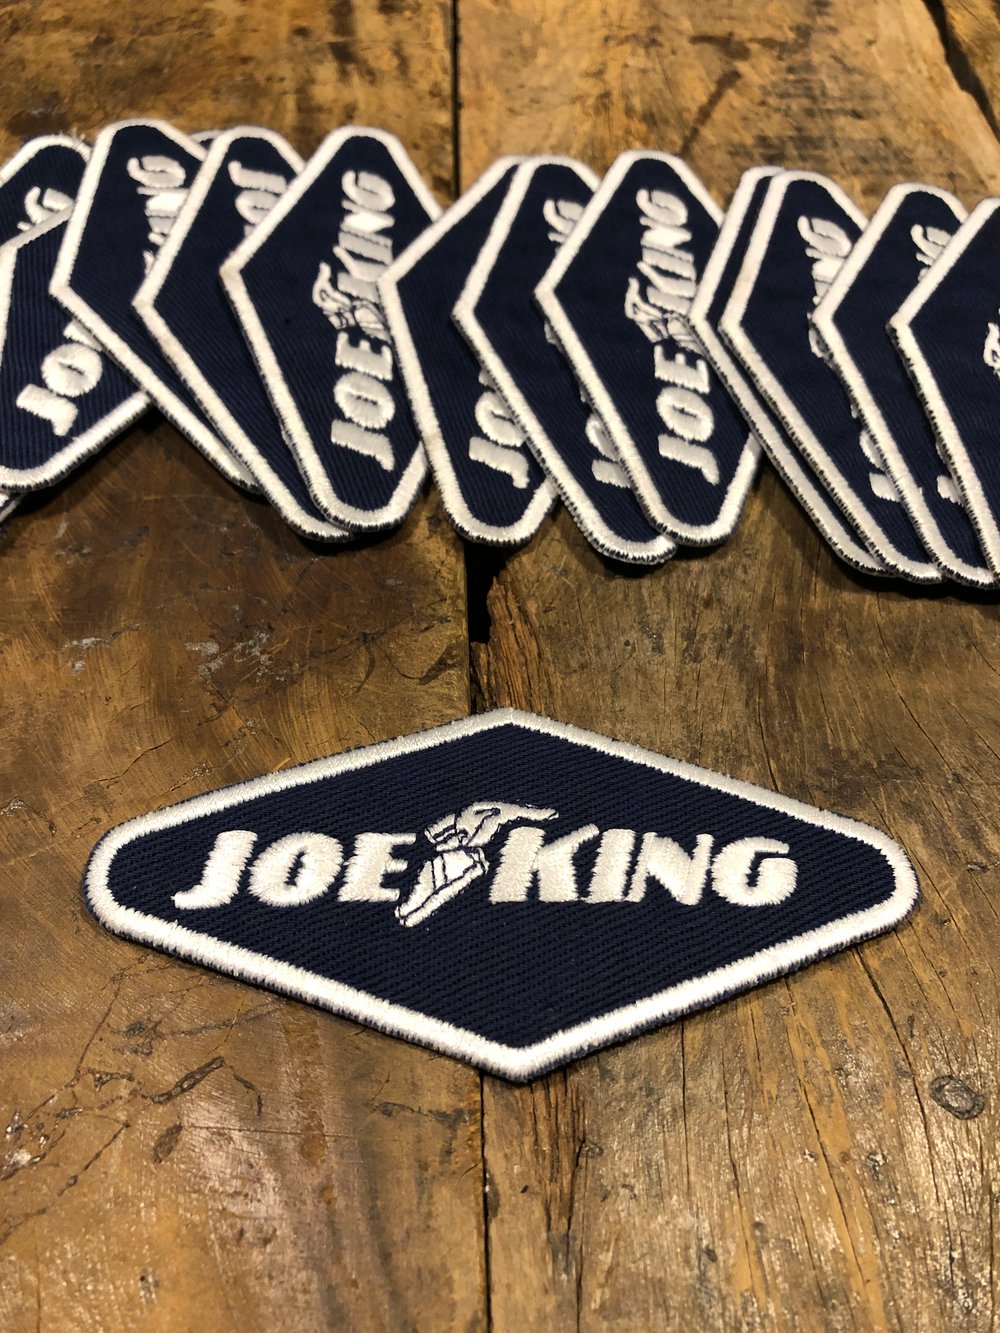 Joe King Racing Tires